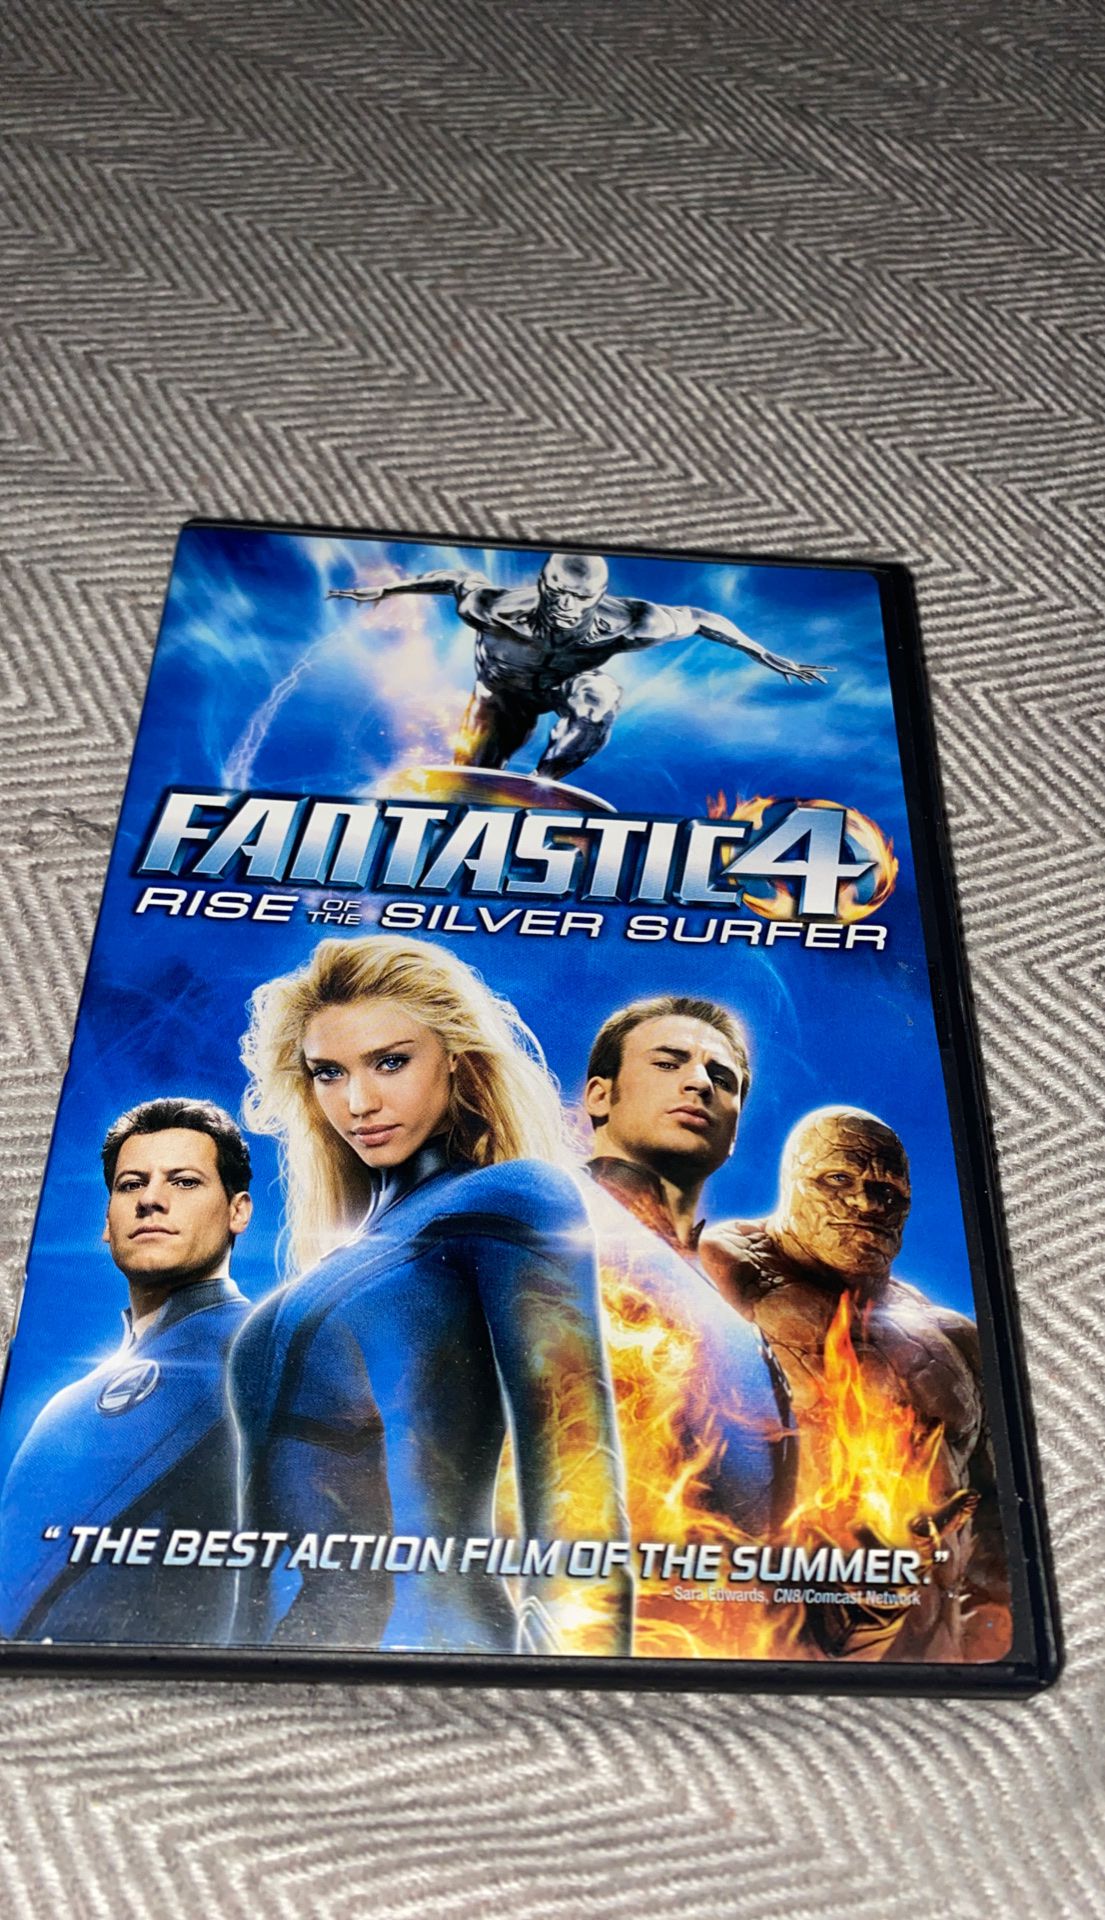 Fantastic 4 DVD